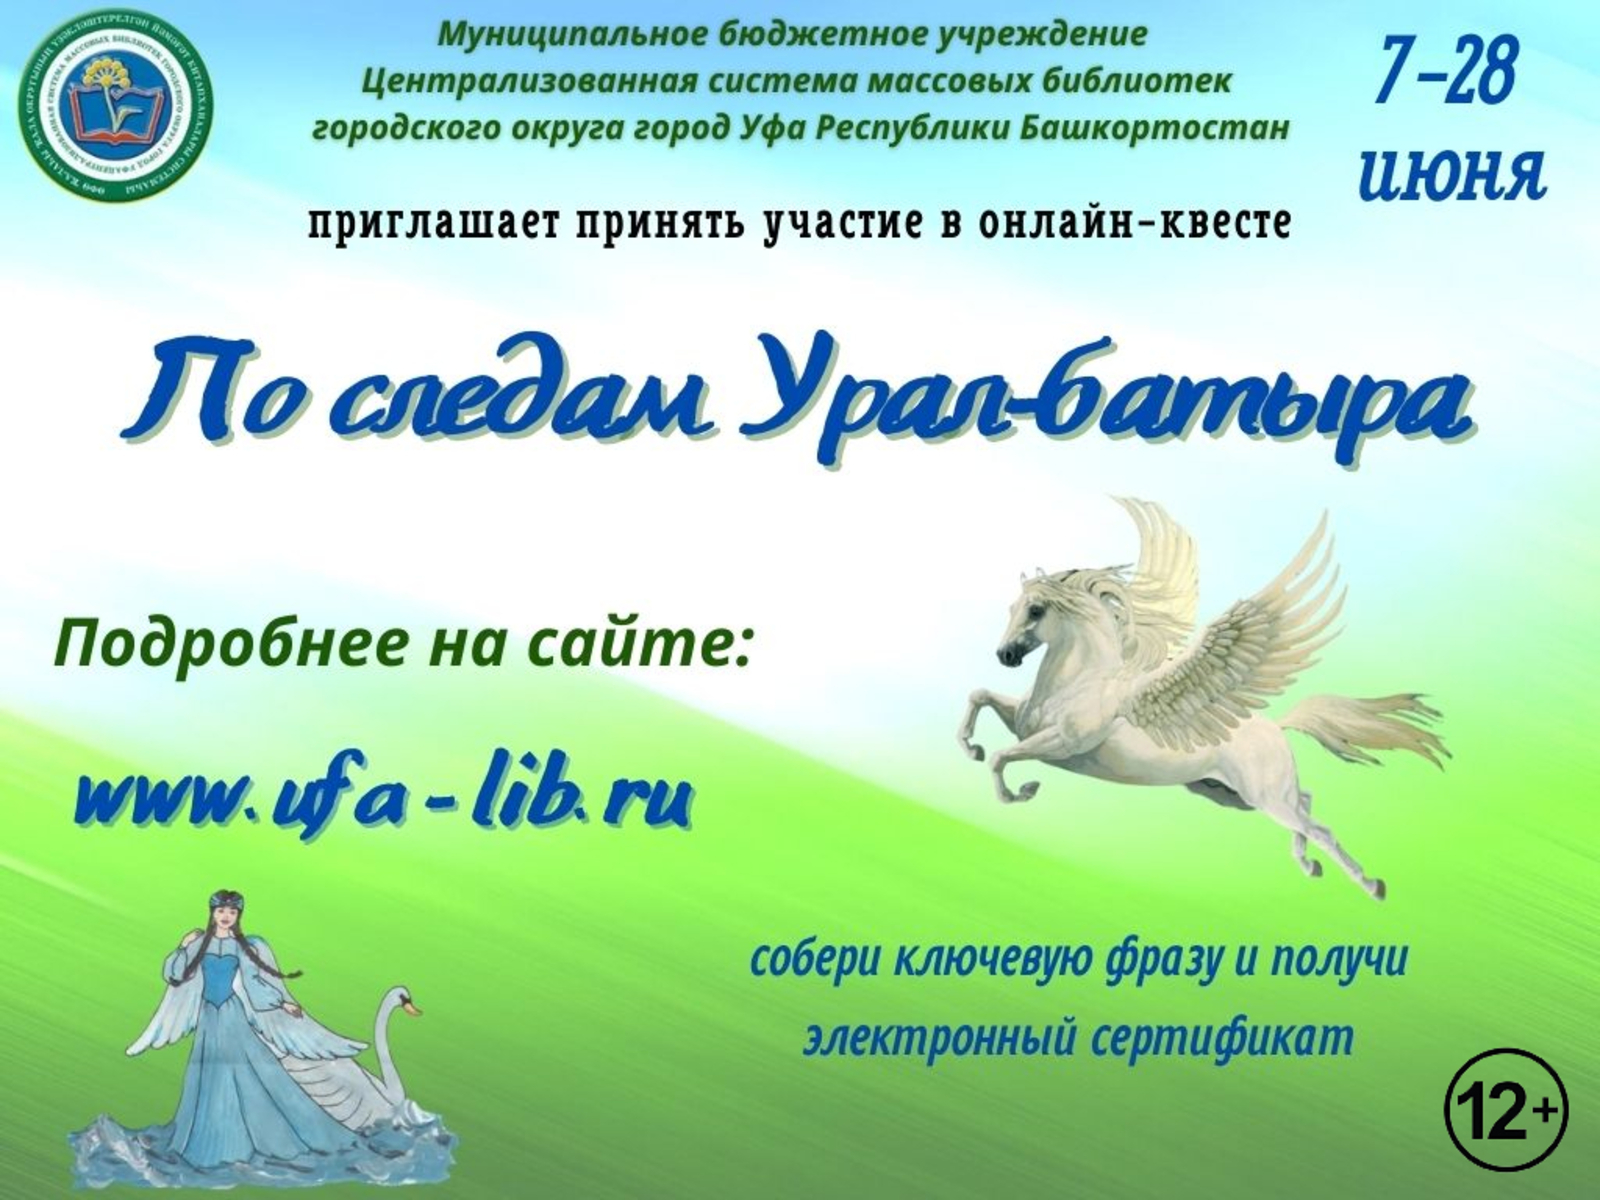 On-line квест «По следам Урал-батыра» приглашает к участию